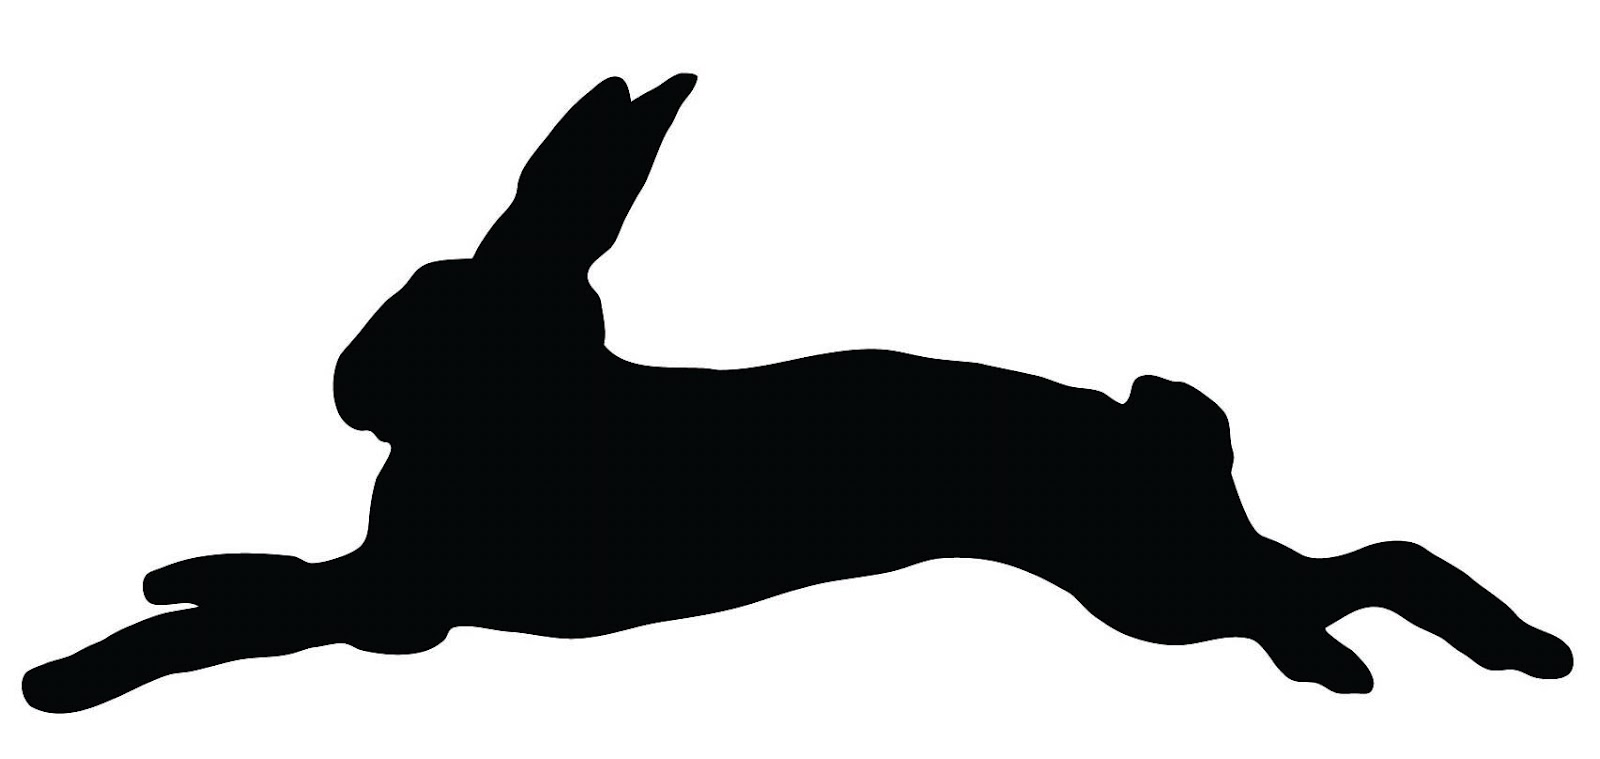 Bunny Silhouette Clip Art - Clipart library